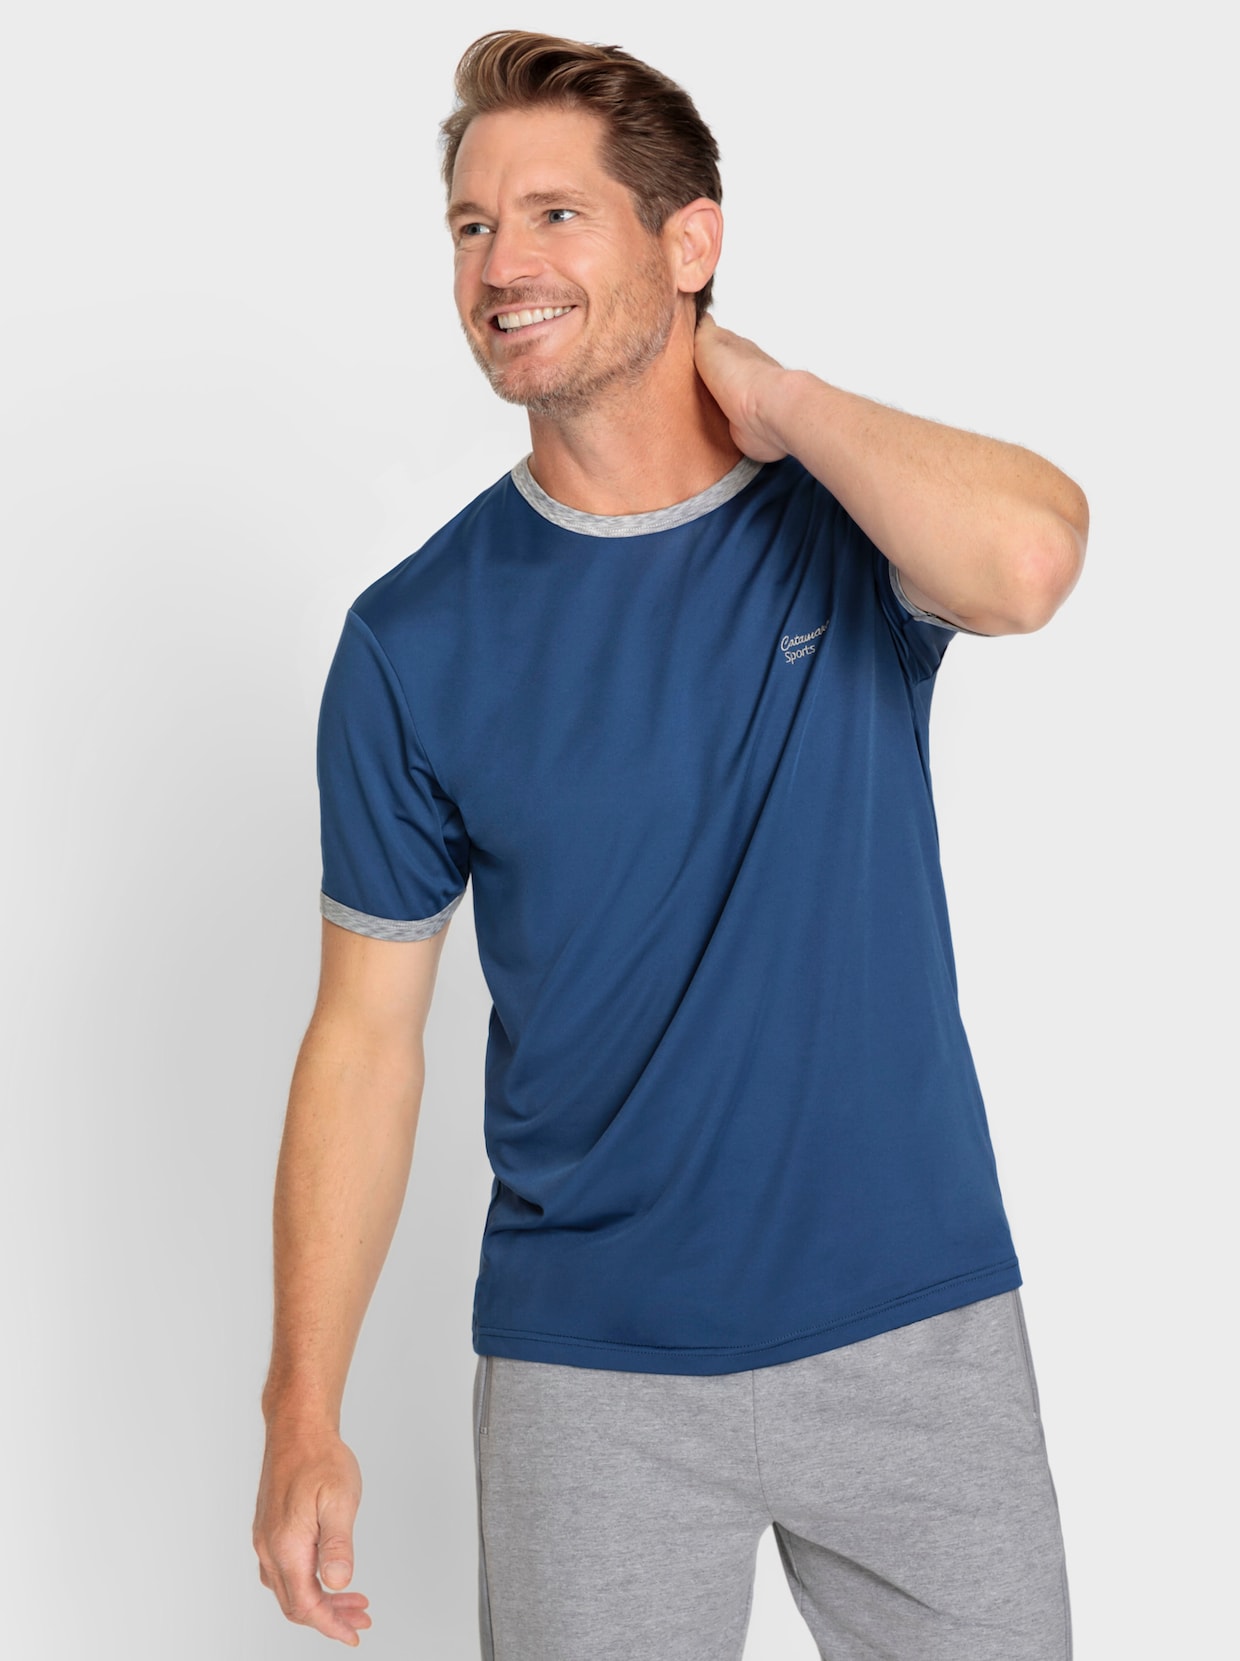 Catamaran Sports Funktions-Shirt - jeansblau